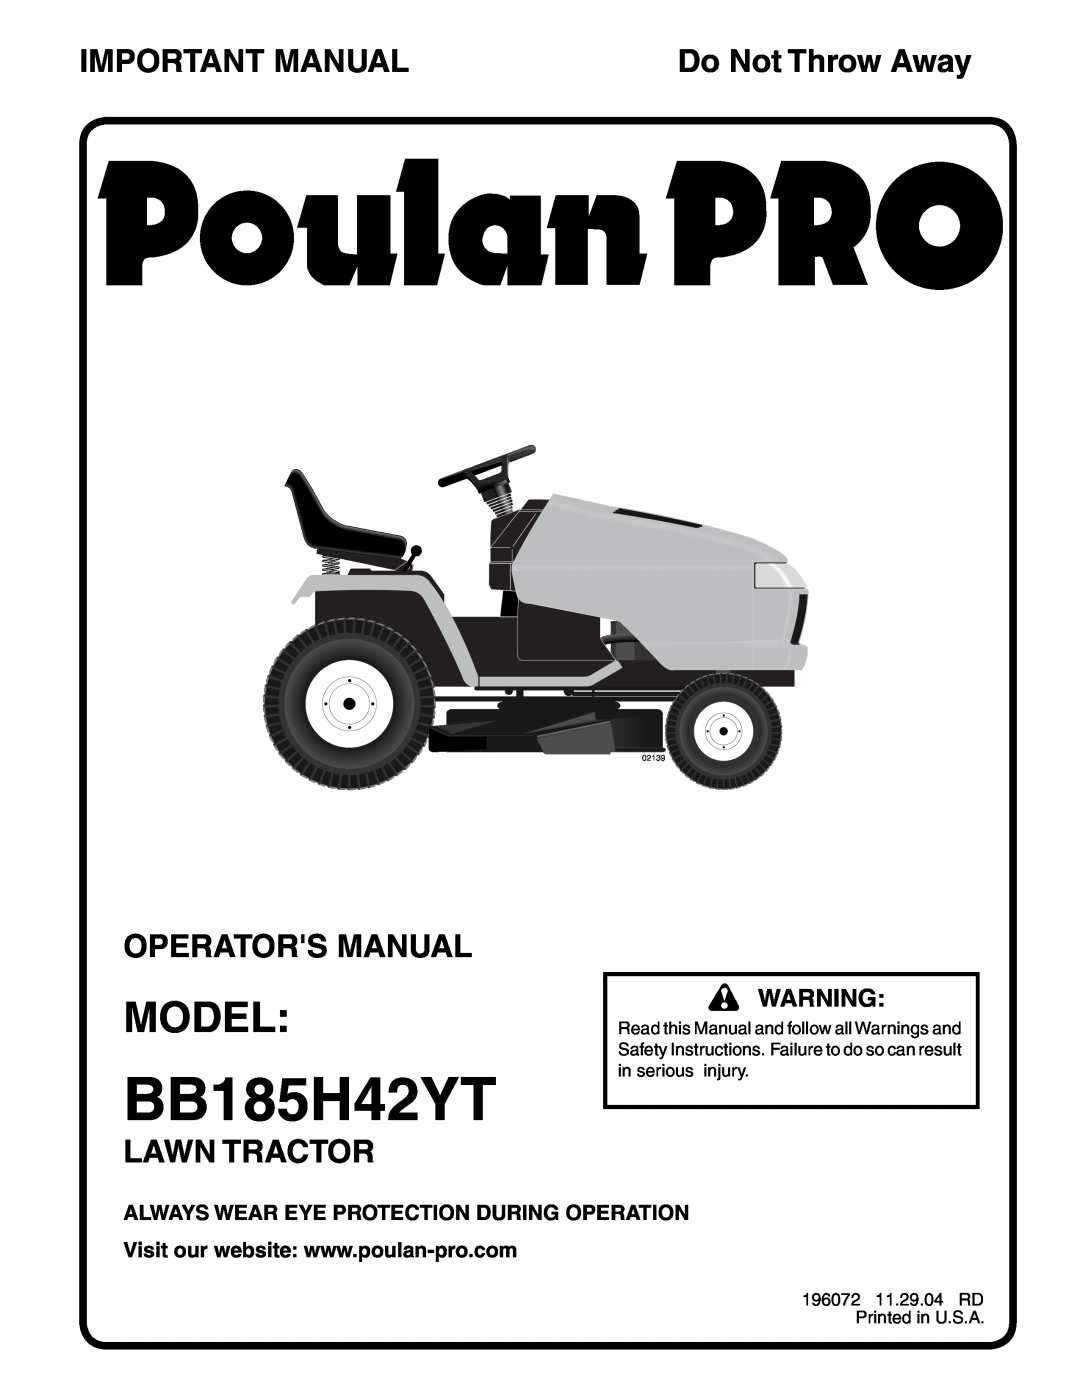 Poulan BB185H42YT manual Model, Important Manual, Operators Manual, Lawn Tractor, Do Not Throw Away, 02139 